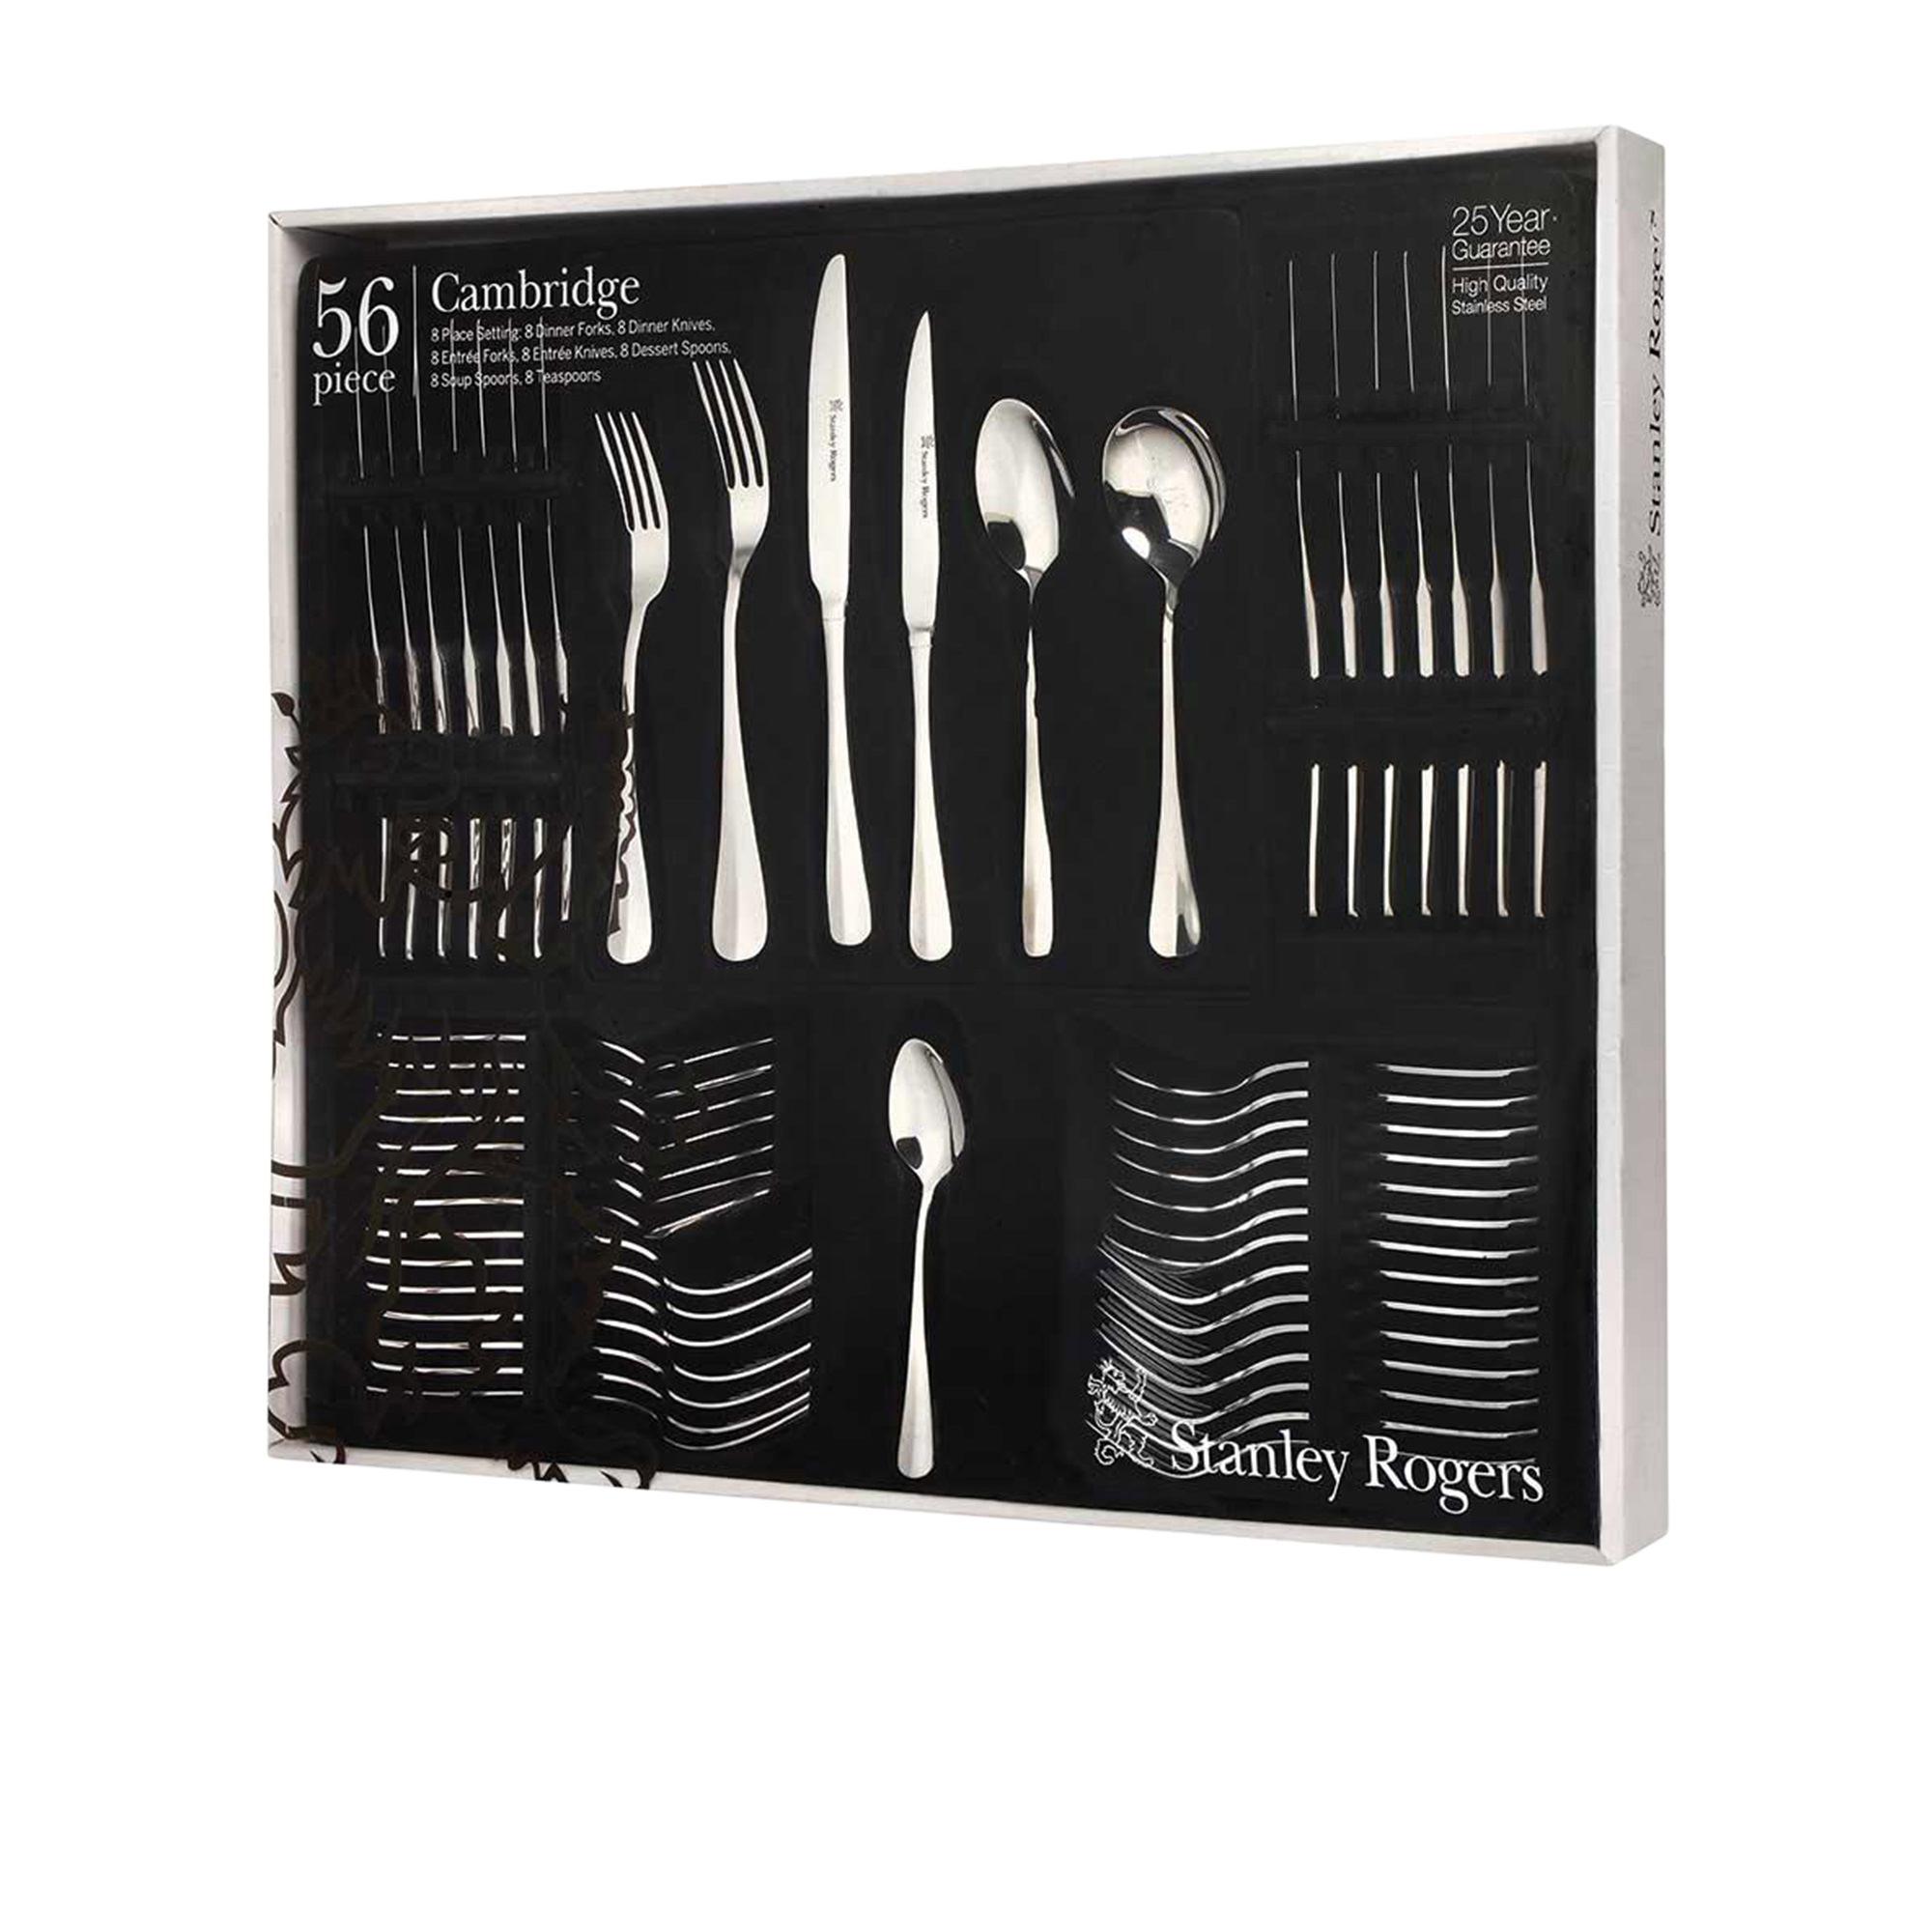 Stanley Rogers Cambridge Cutlery Set 56pc Image 4